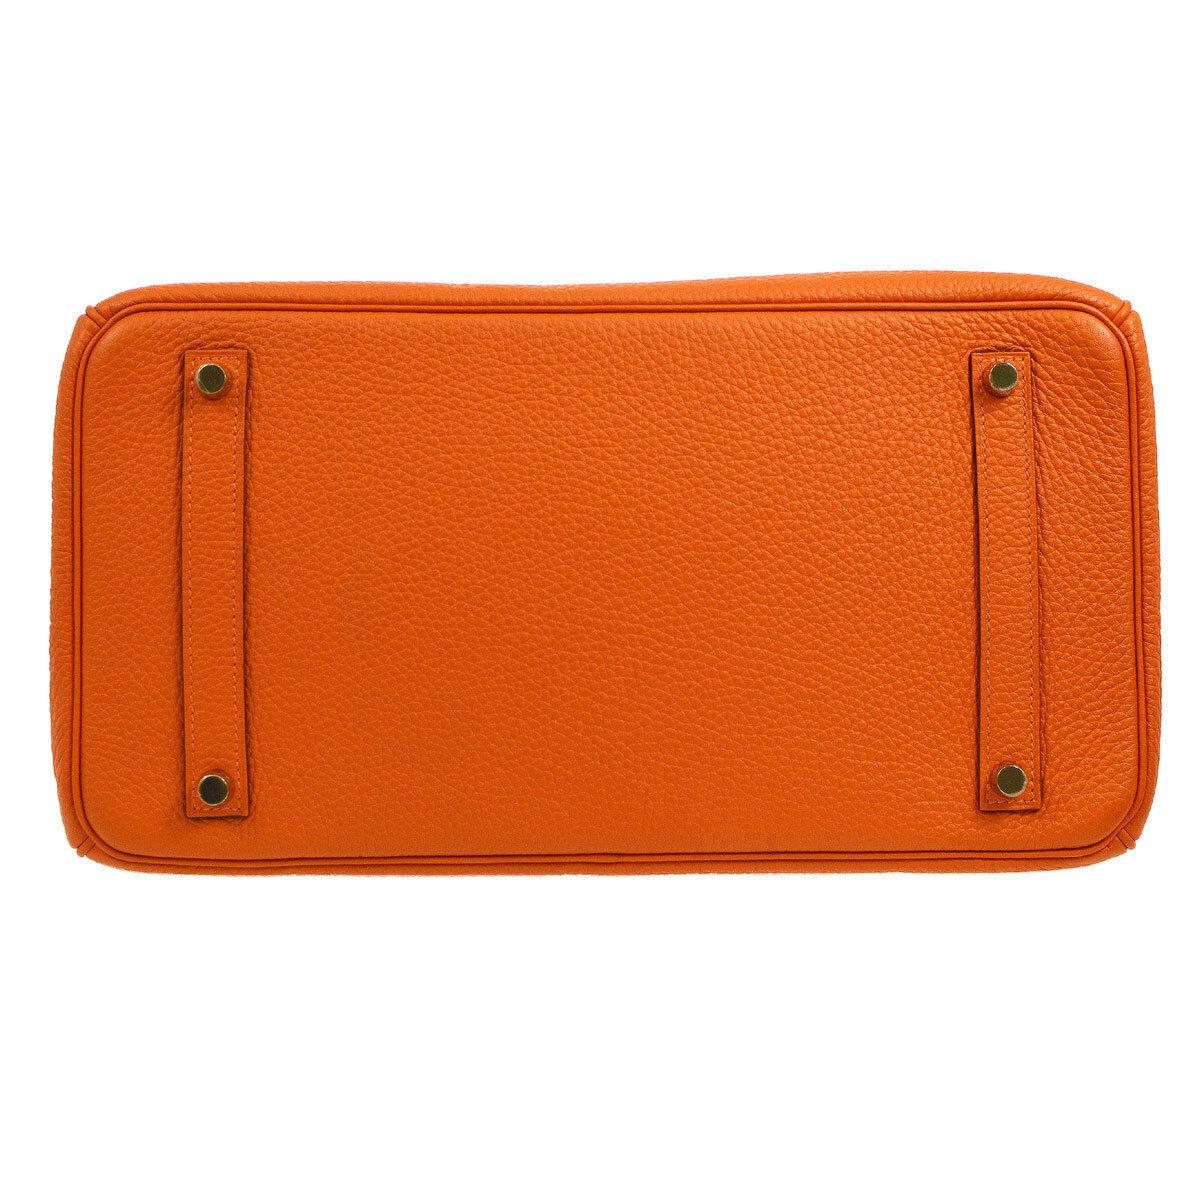 Hermes Birkin 35 Orange Leather Gold Top Handle Satchel Travel Tote Bag in Box 3